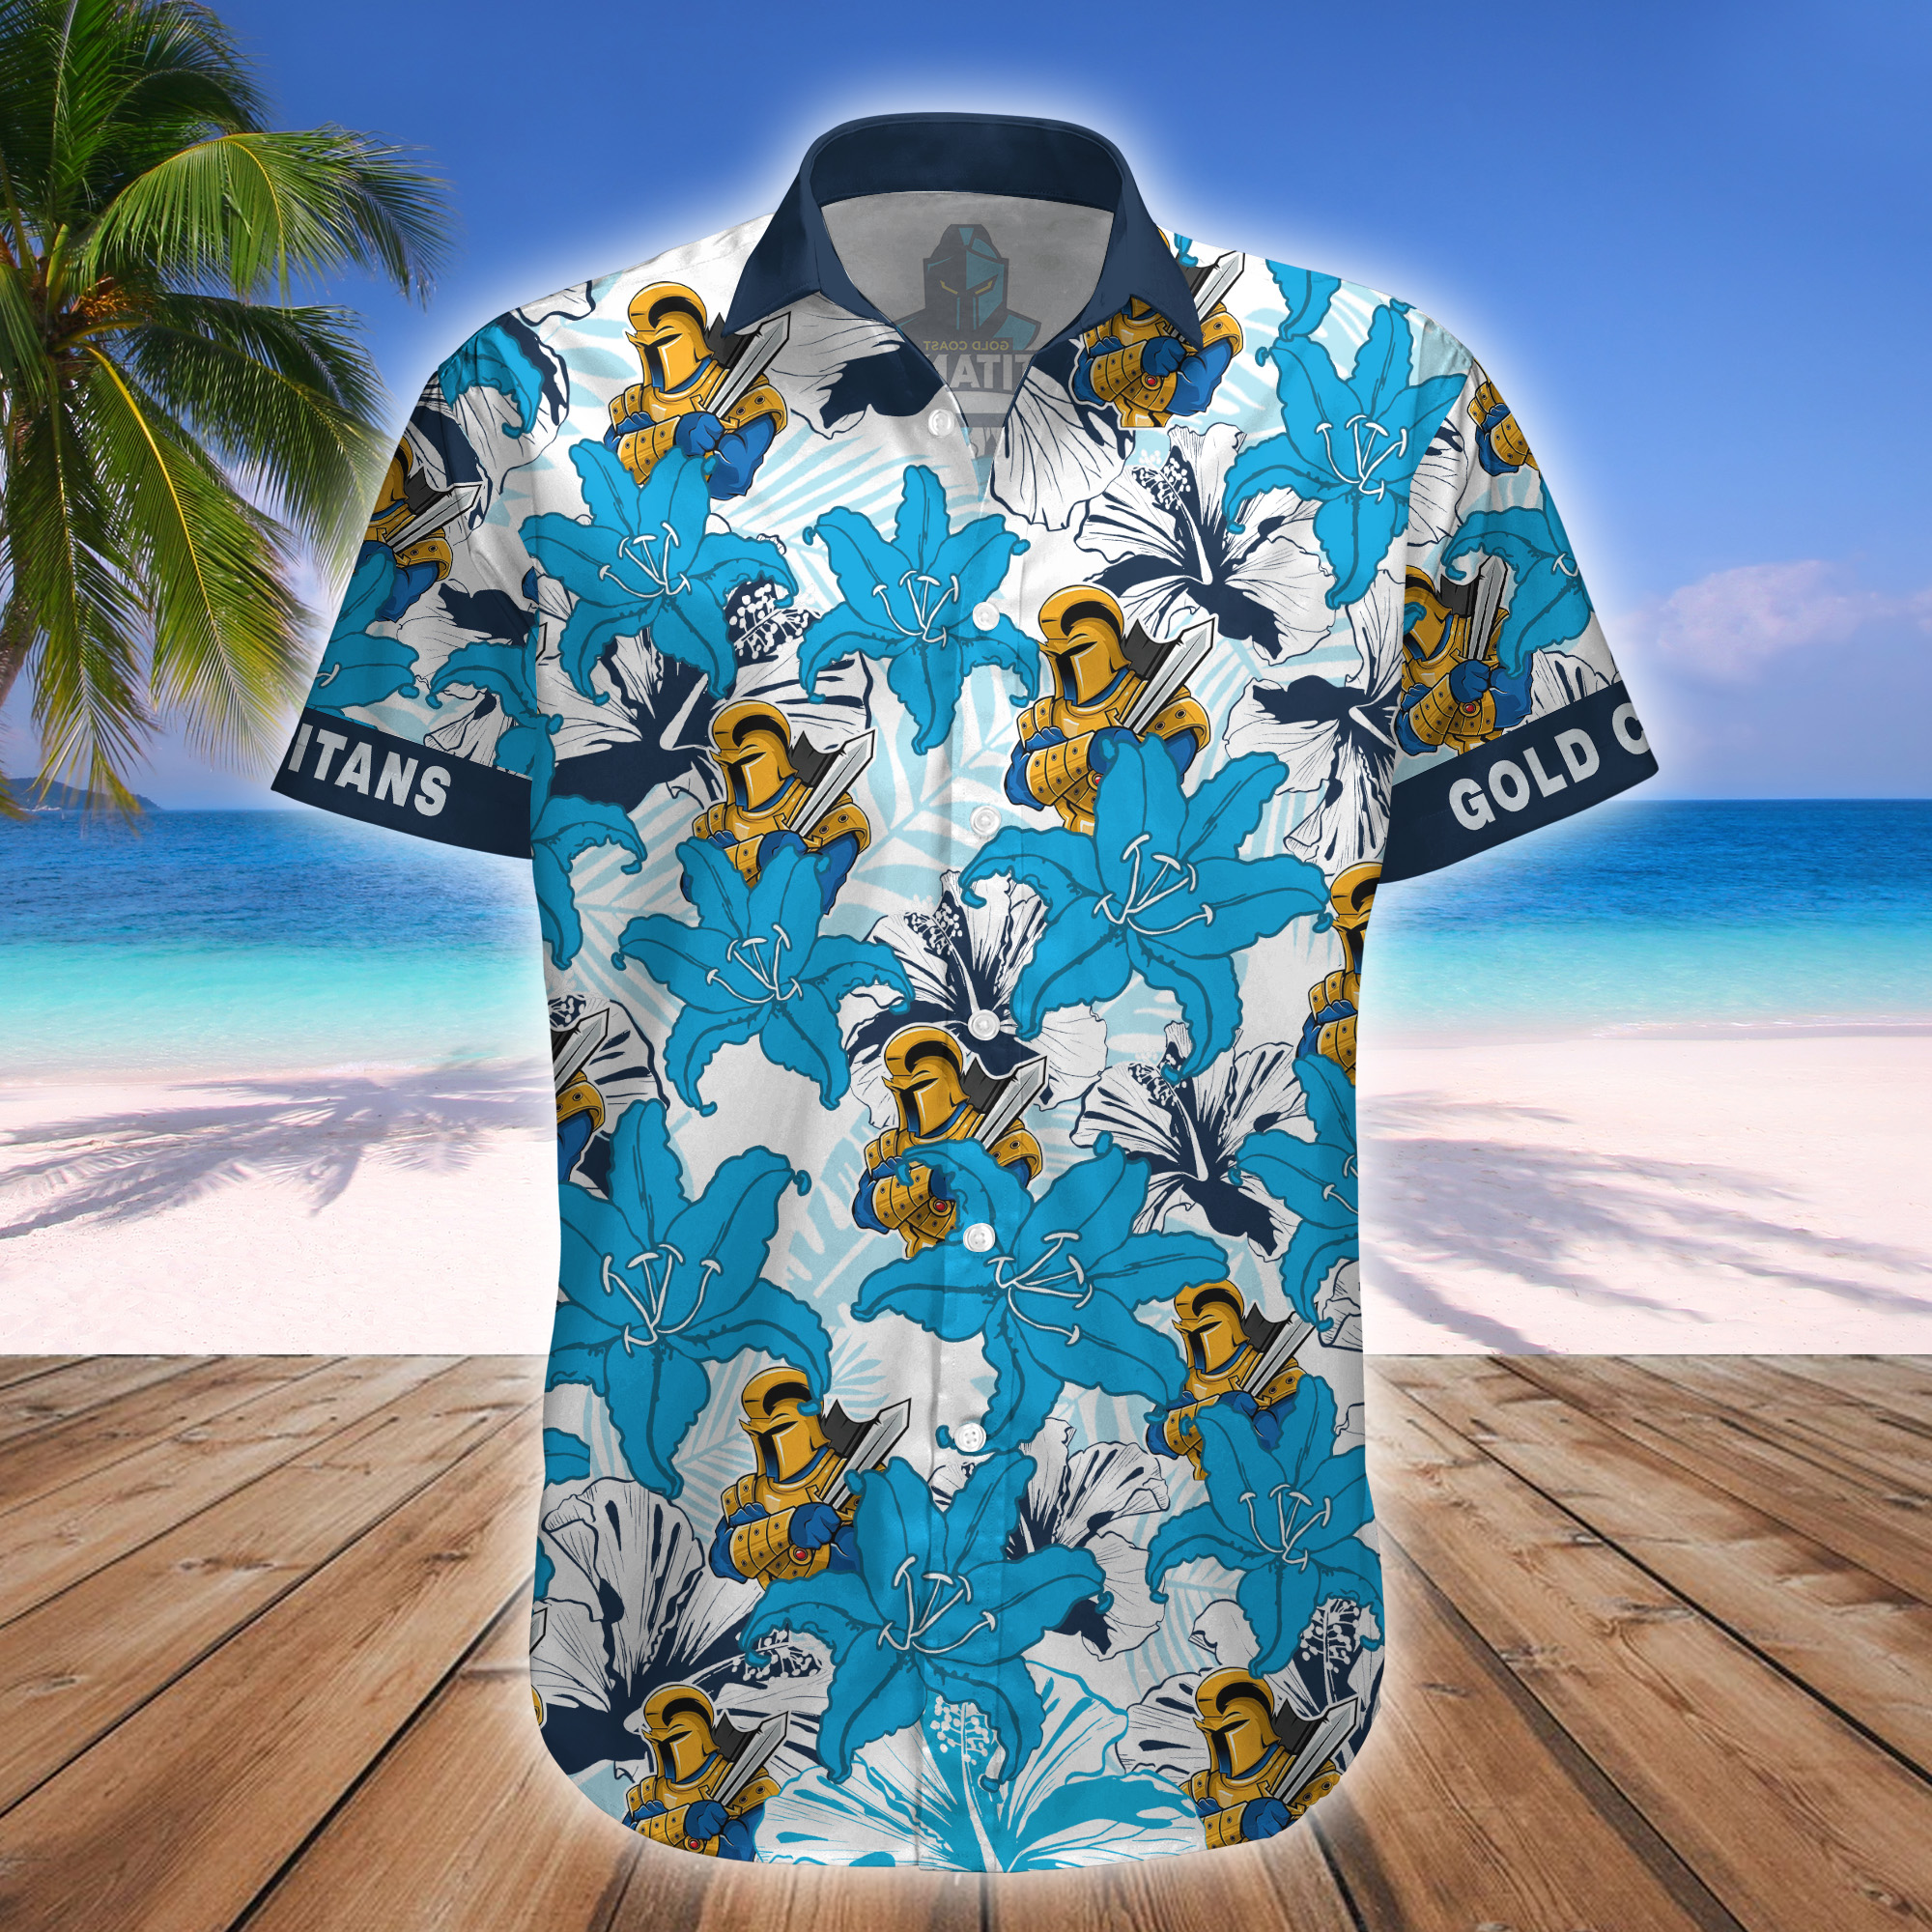 Gold Coast Titans NRLMascot Hawaiian Shirt